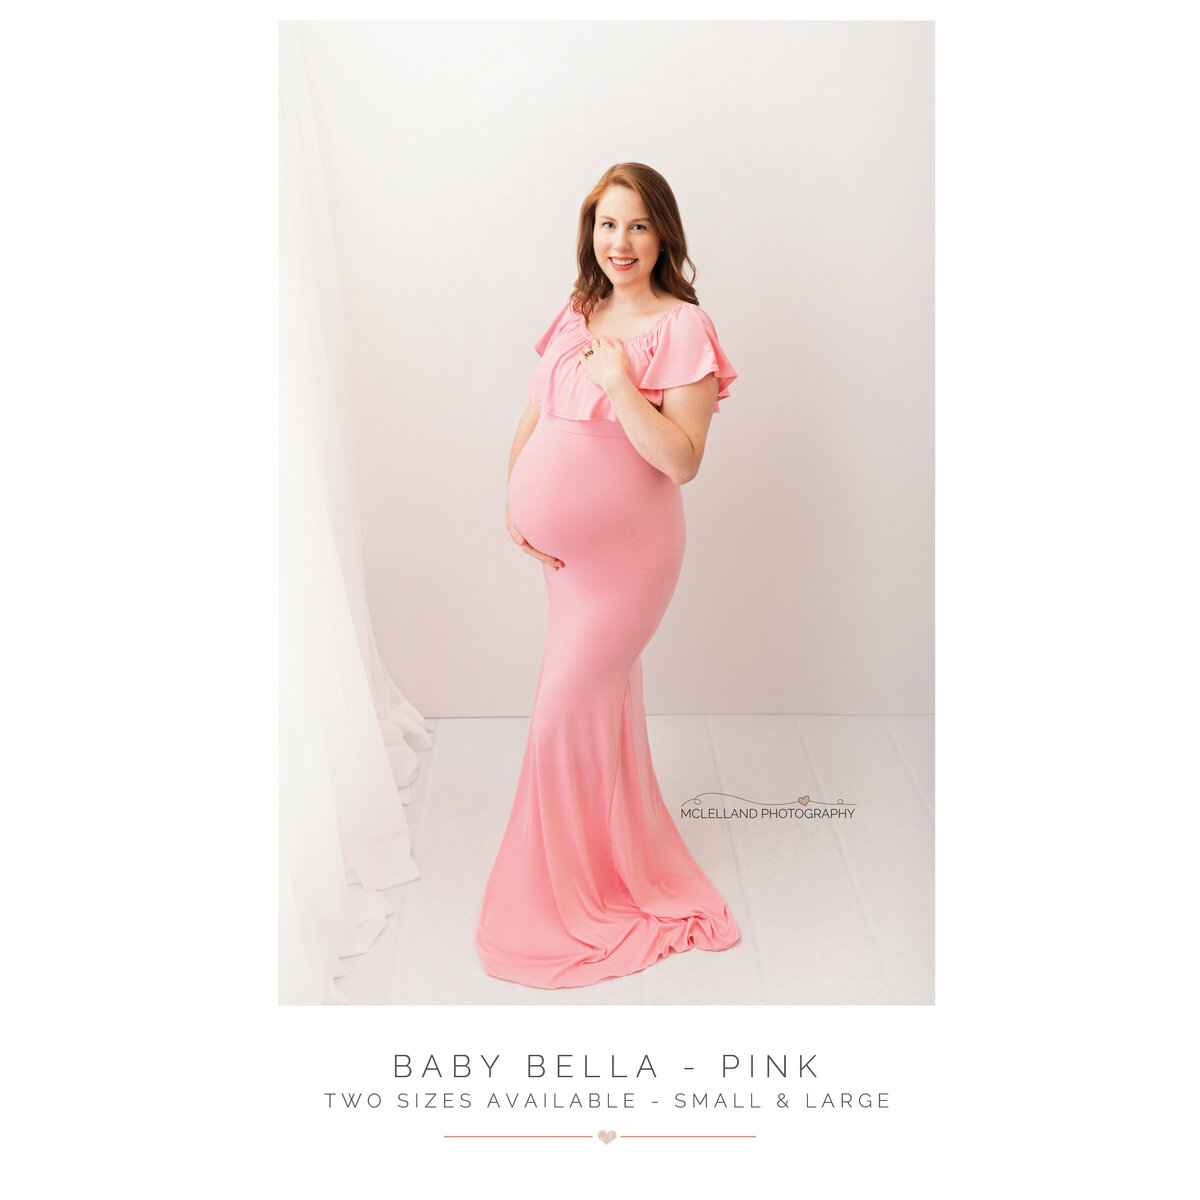 Baby Bella - Pink